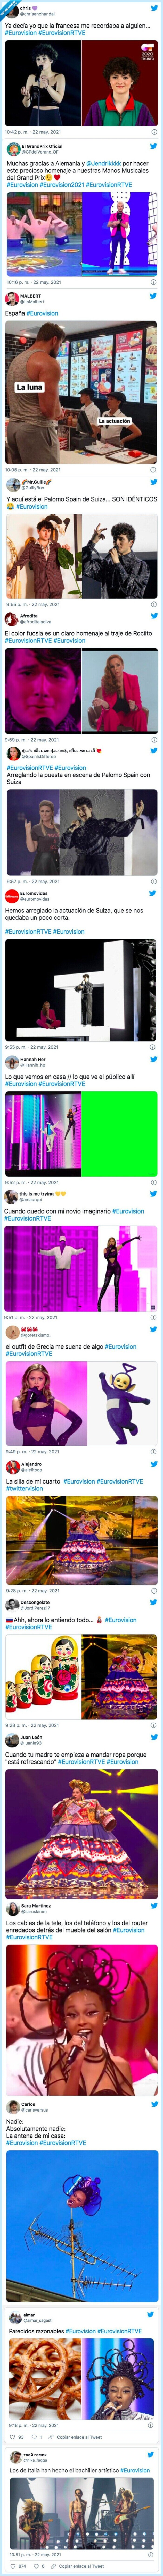 eurovision,memes